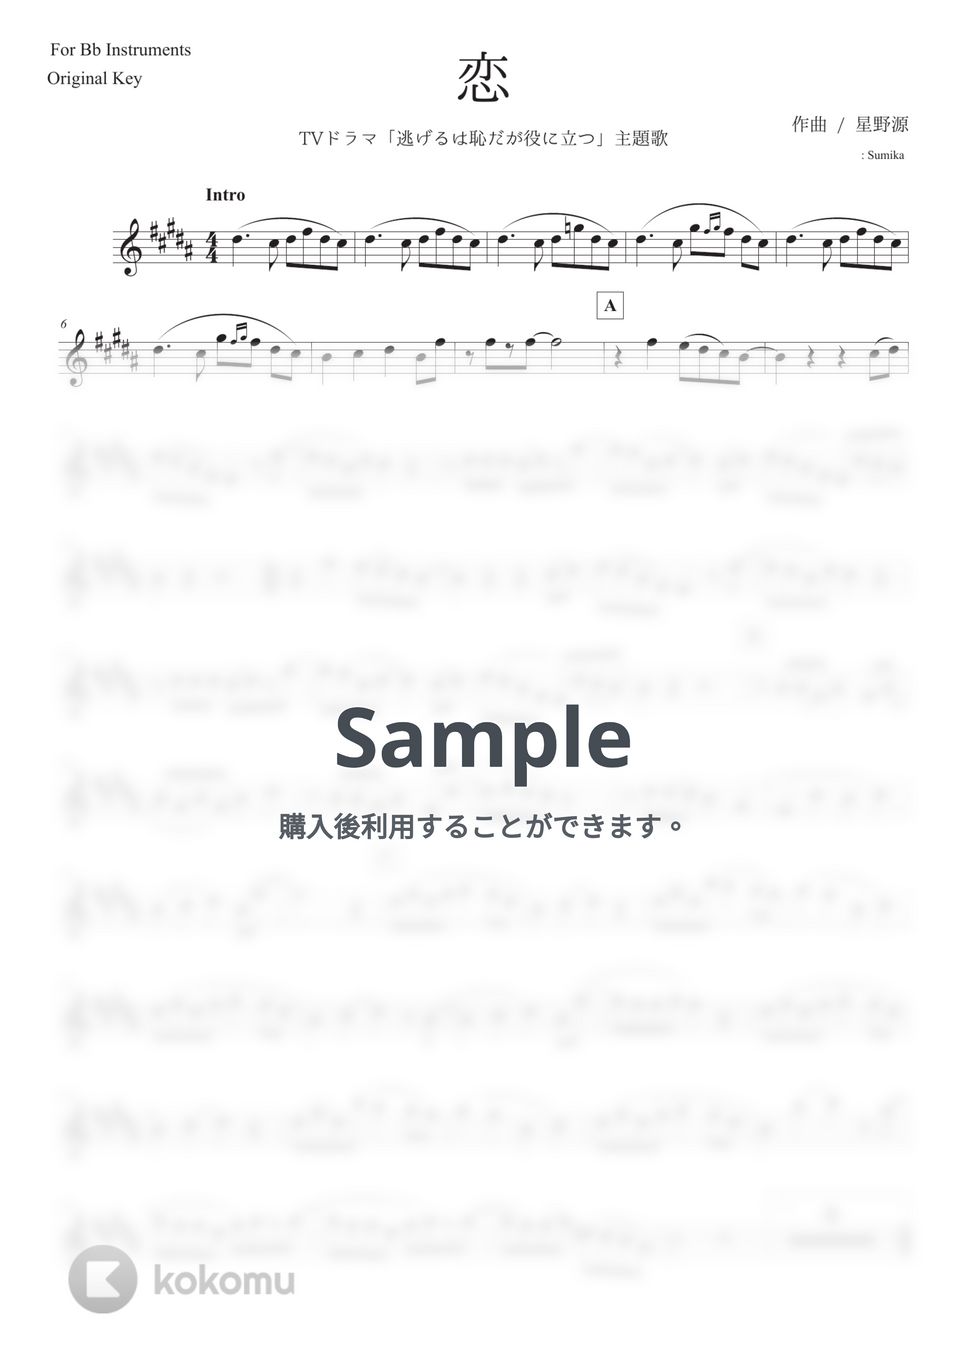 星野源 - 恋 (in Bb / Original Key) by Sumika